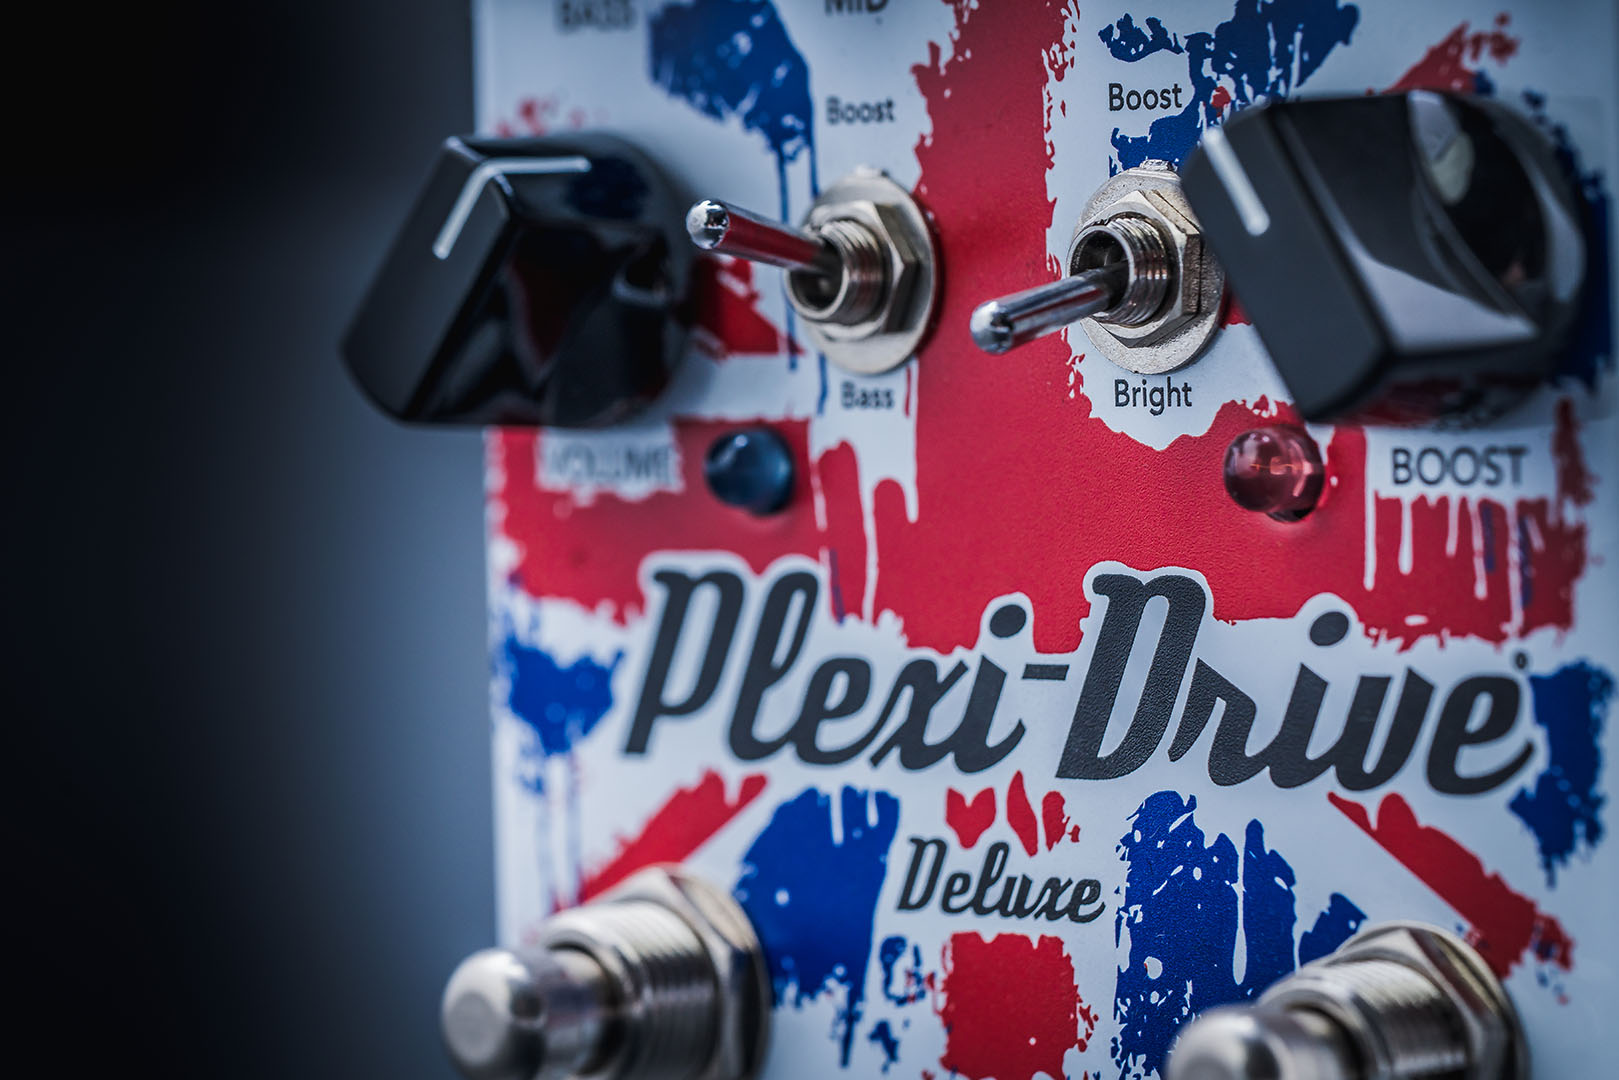 Plexi Drive Deluxe - Wampler Pedals